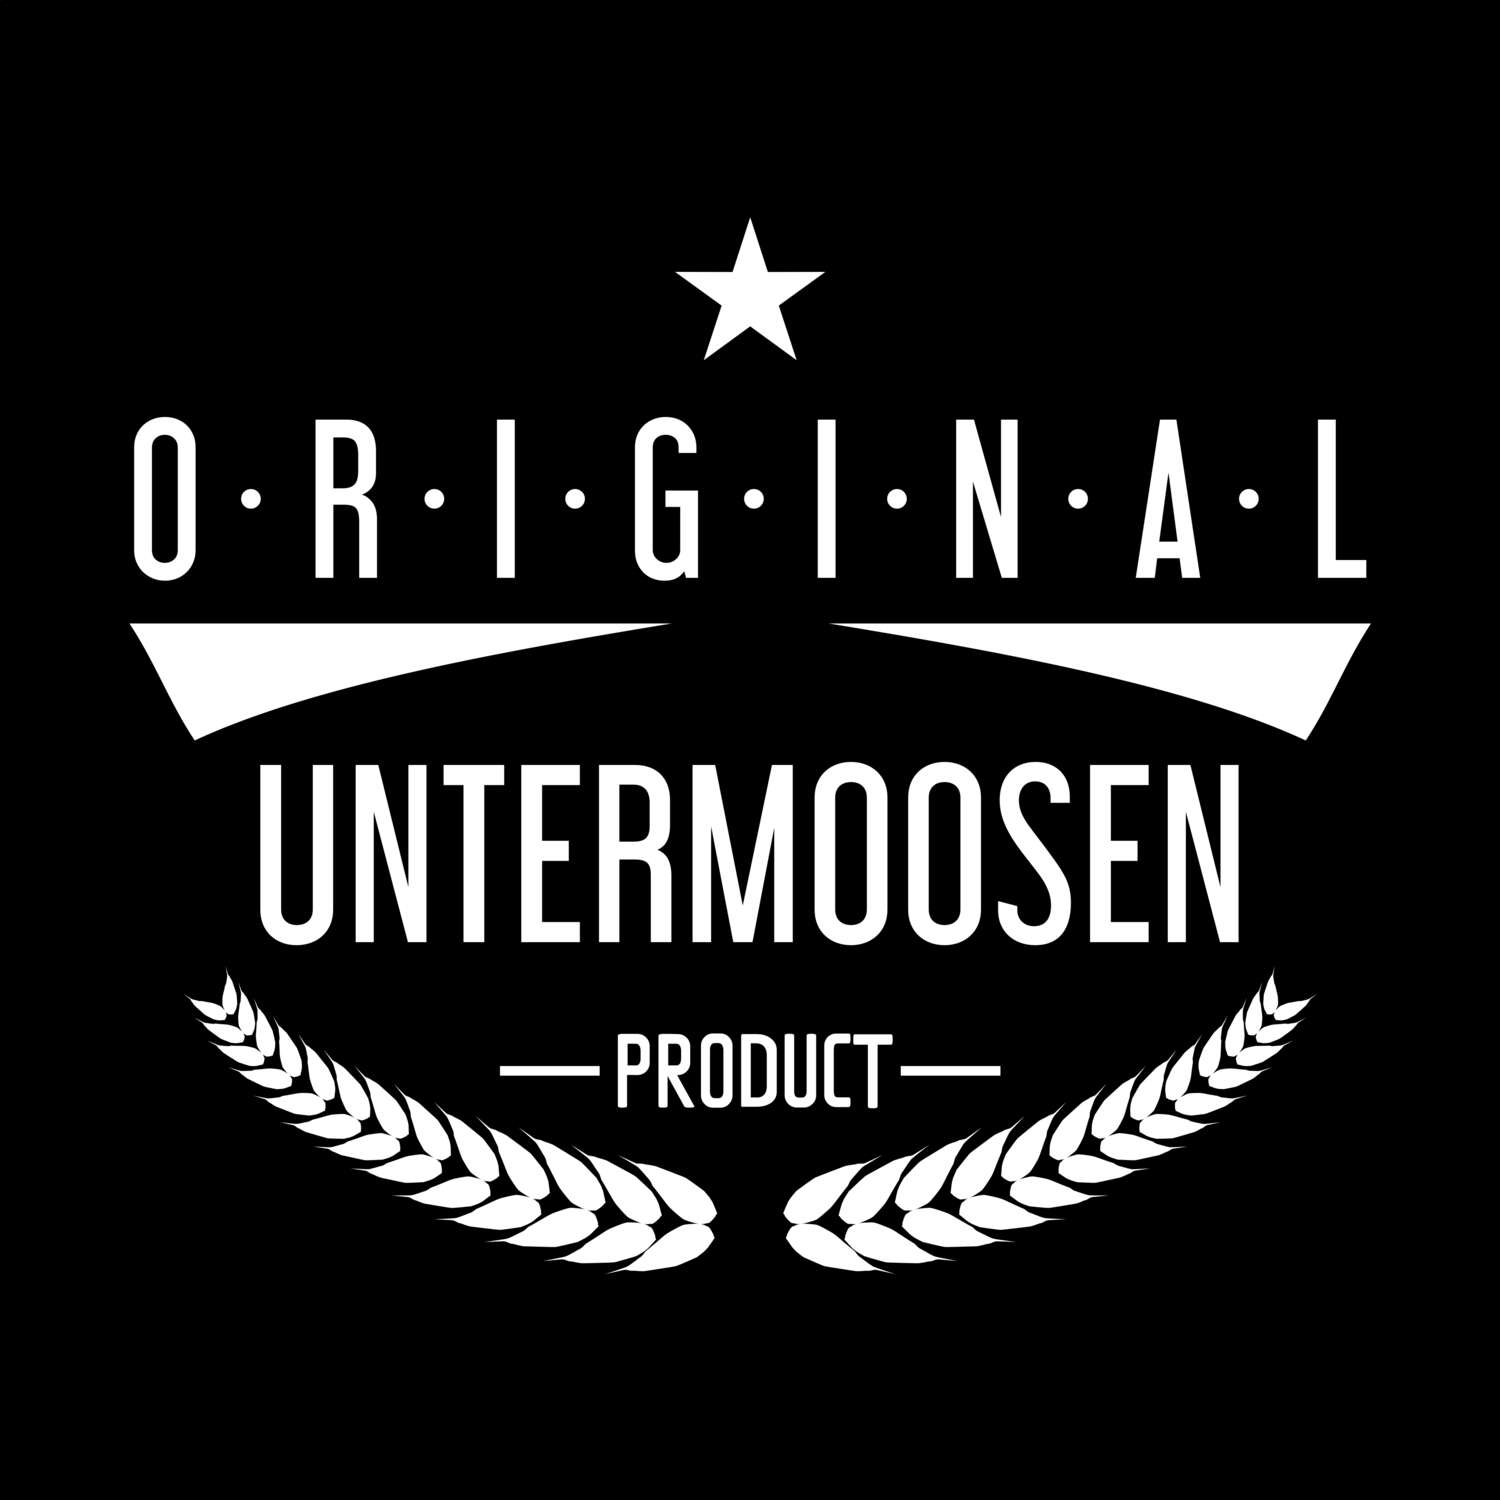 Untermoosen T-Shirt »Original Product«